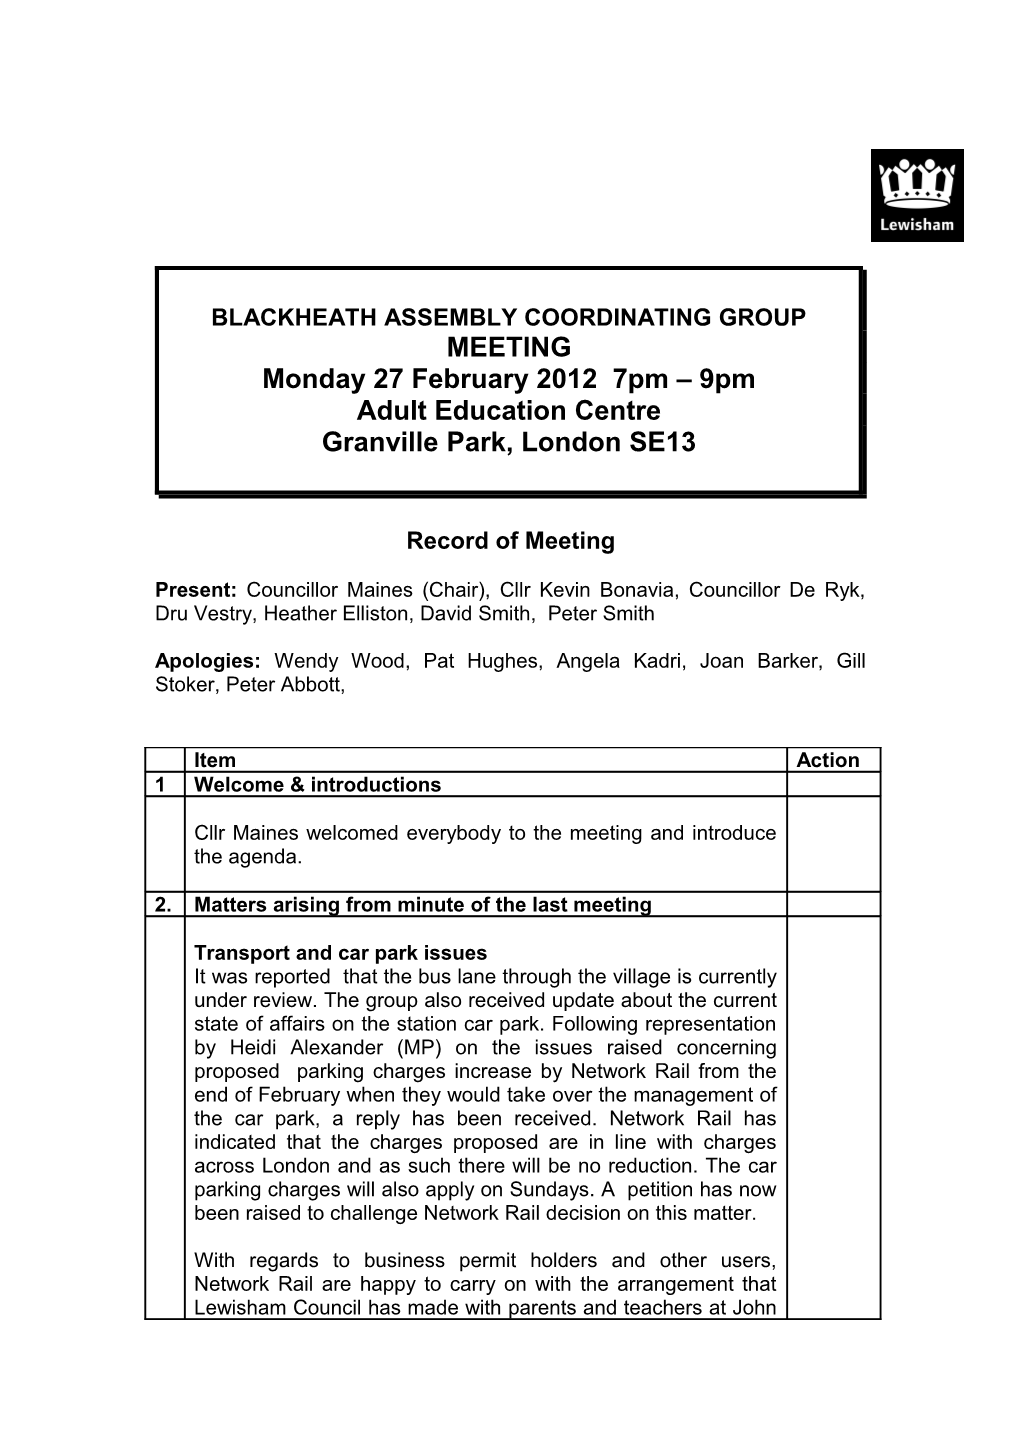 Blackheath Coordinating Group Meeting 27 February 2012 Minutes